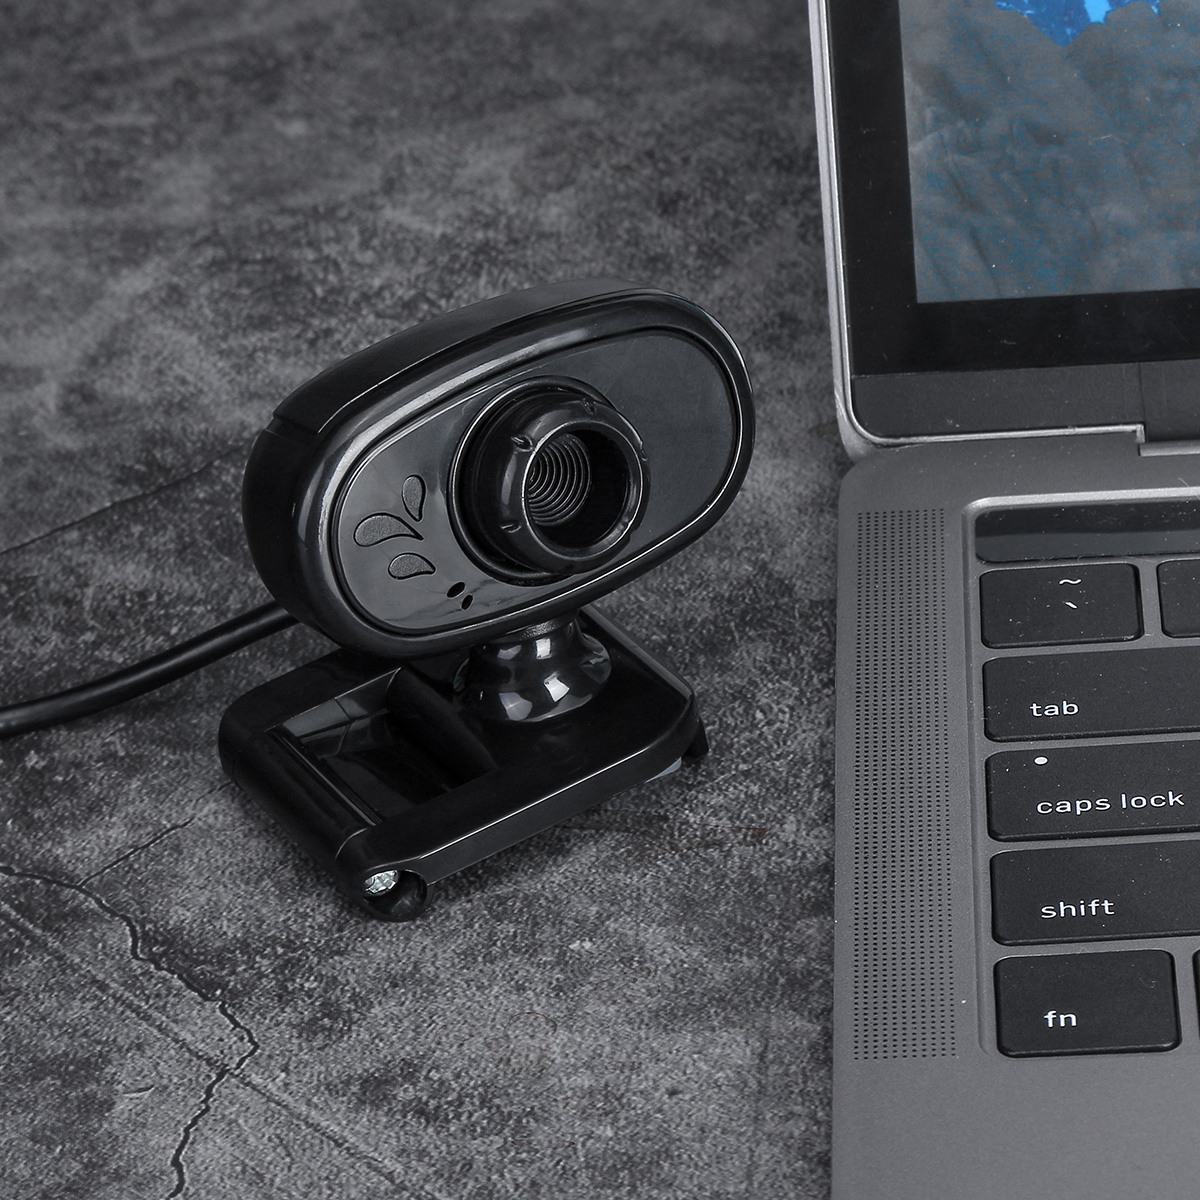 HD-USB-Webcam-with-Built-in-Microphone-Video-Web-Class-Camera-PC-Laptop-Desktop-1676225-7